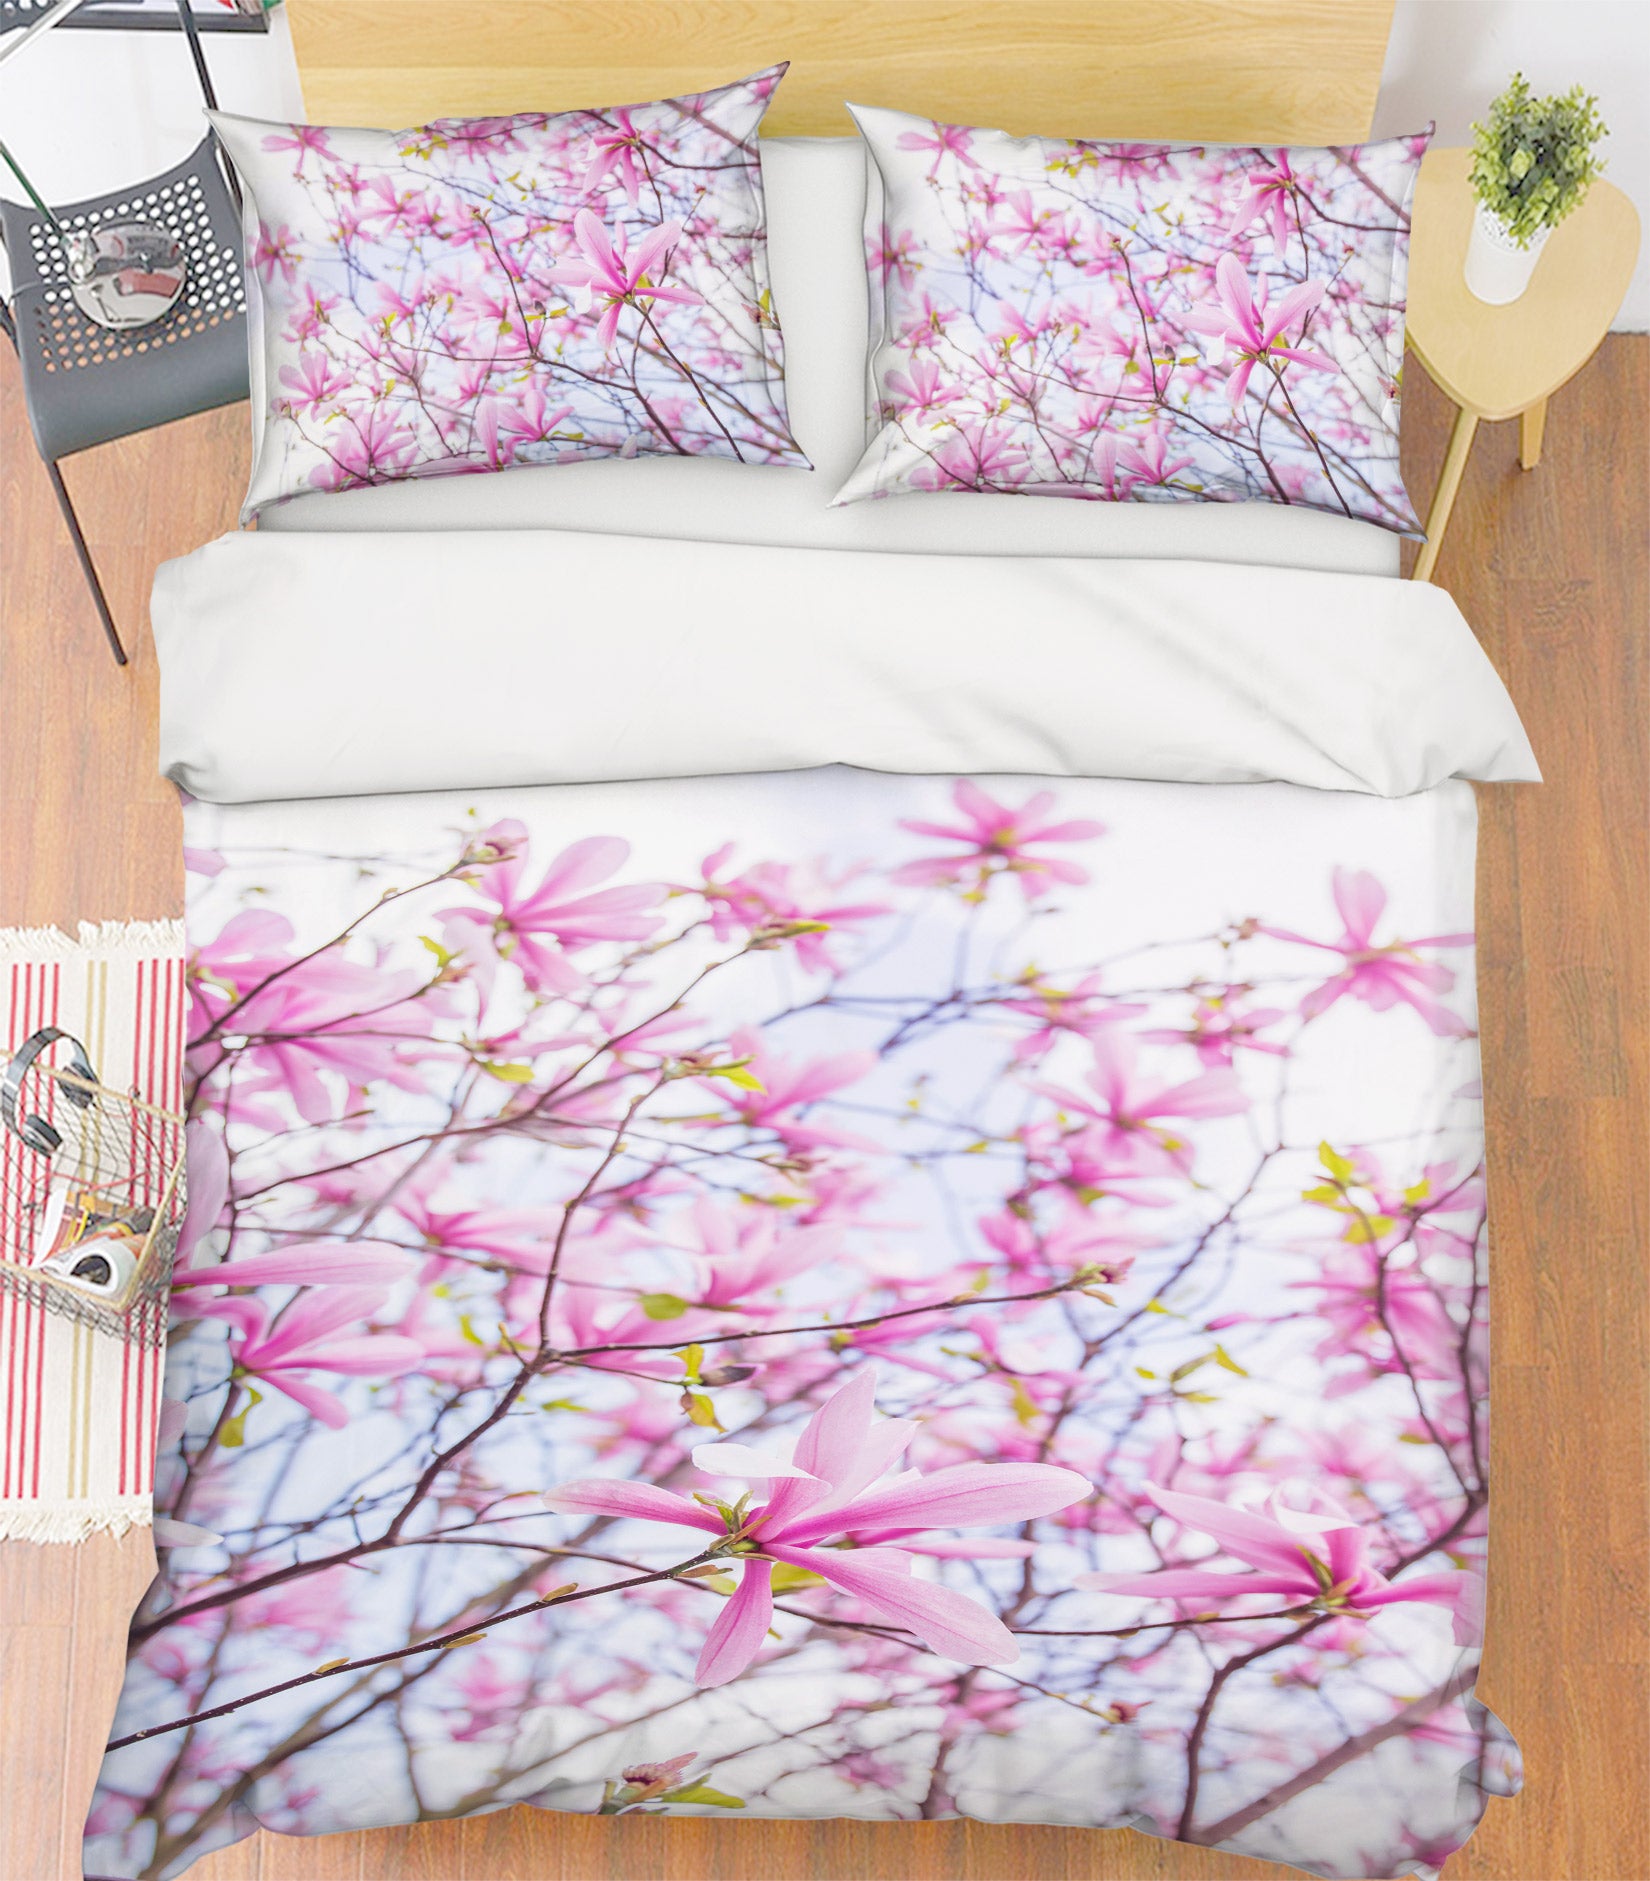 3D Flower Branch 6943 Assaf Frank Bedding Bed Pillowcases Quilt Cover Duvet Cover